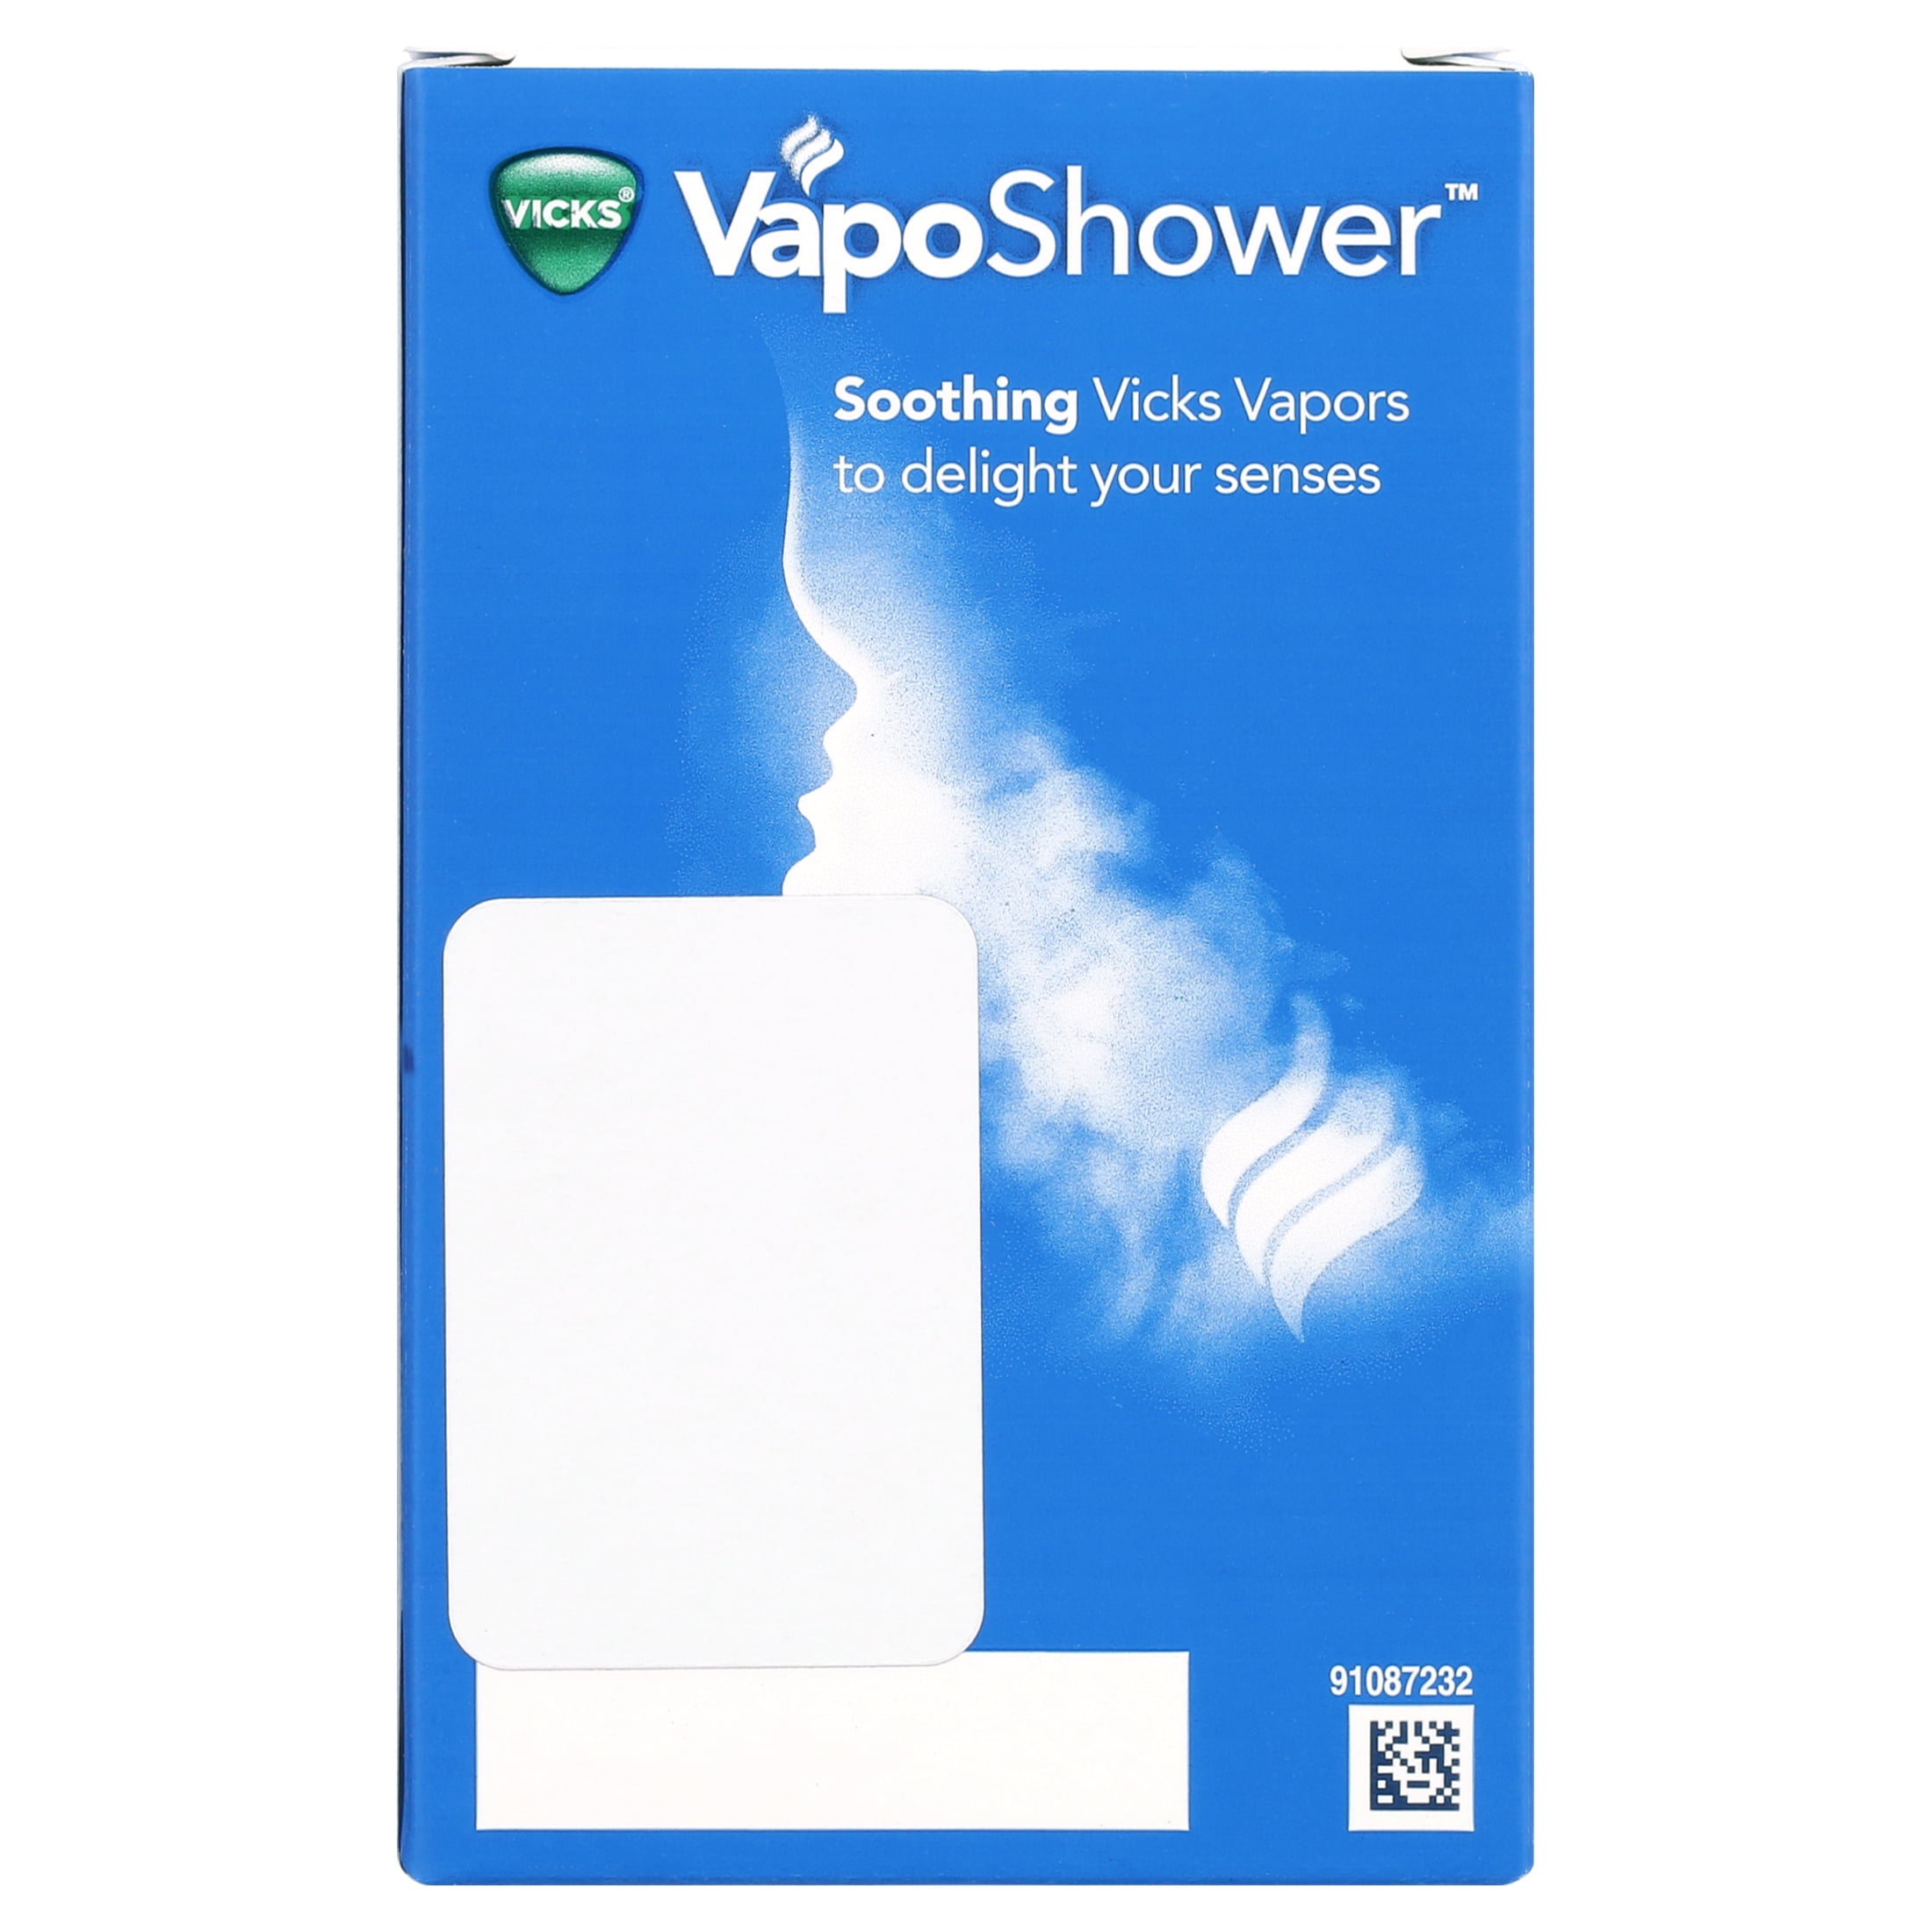 Vicks Vaposhower Soothing Vapors Tablets - 5ct : Target